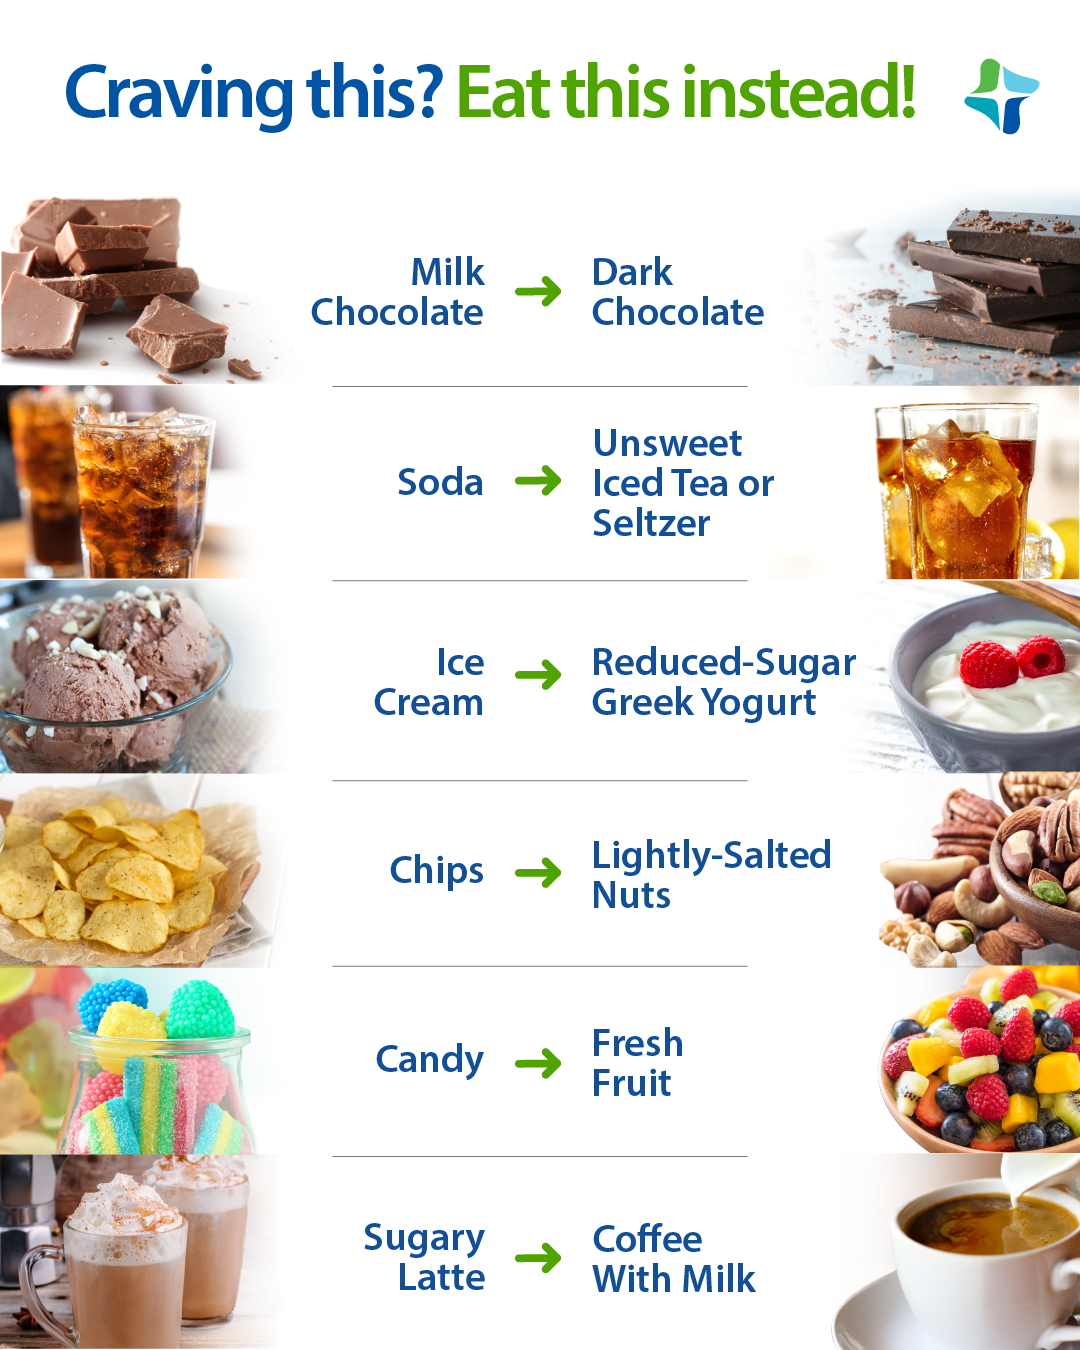 Healthy alternatives to satisfy cravings